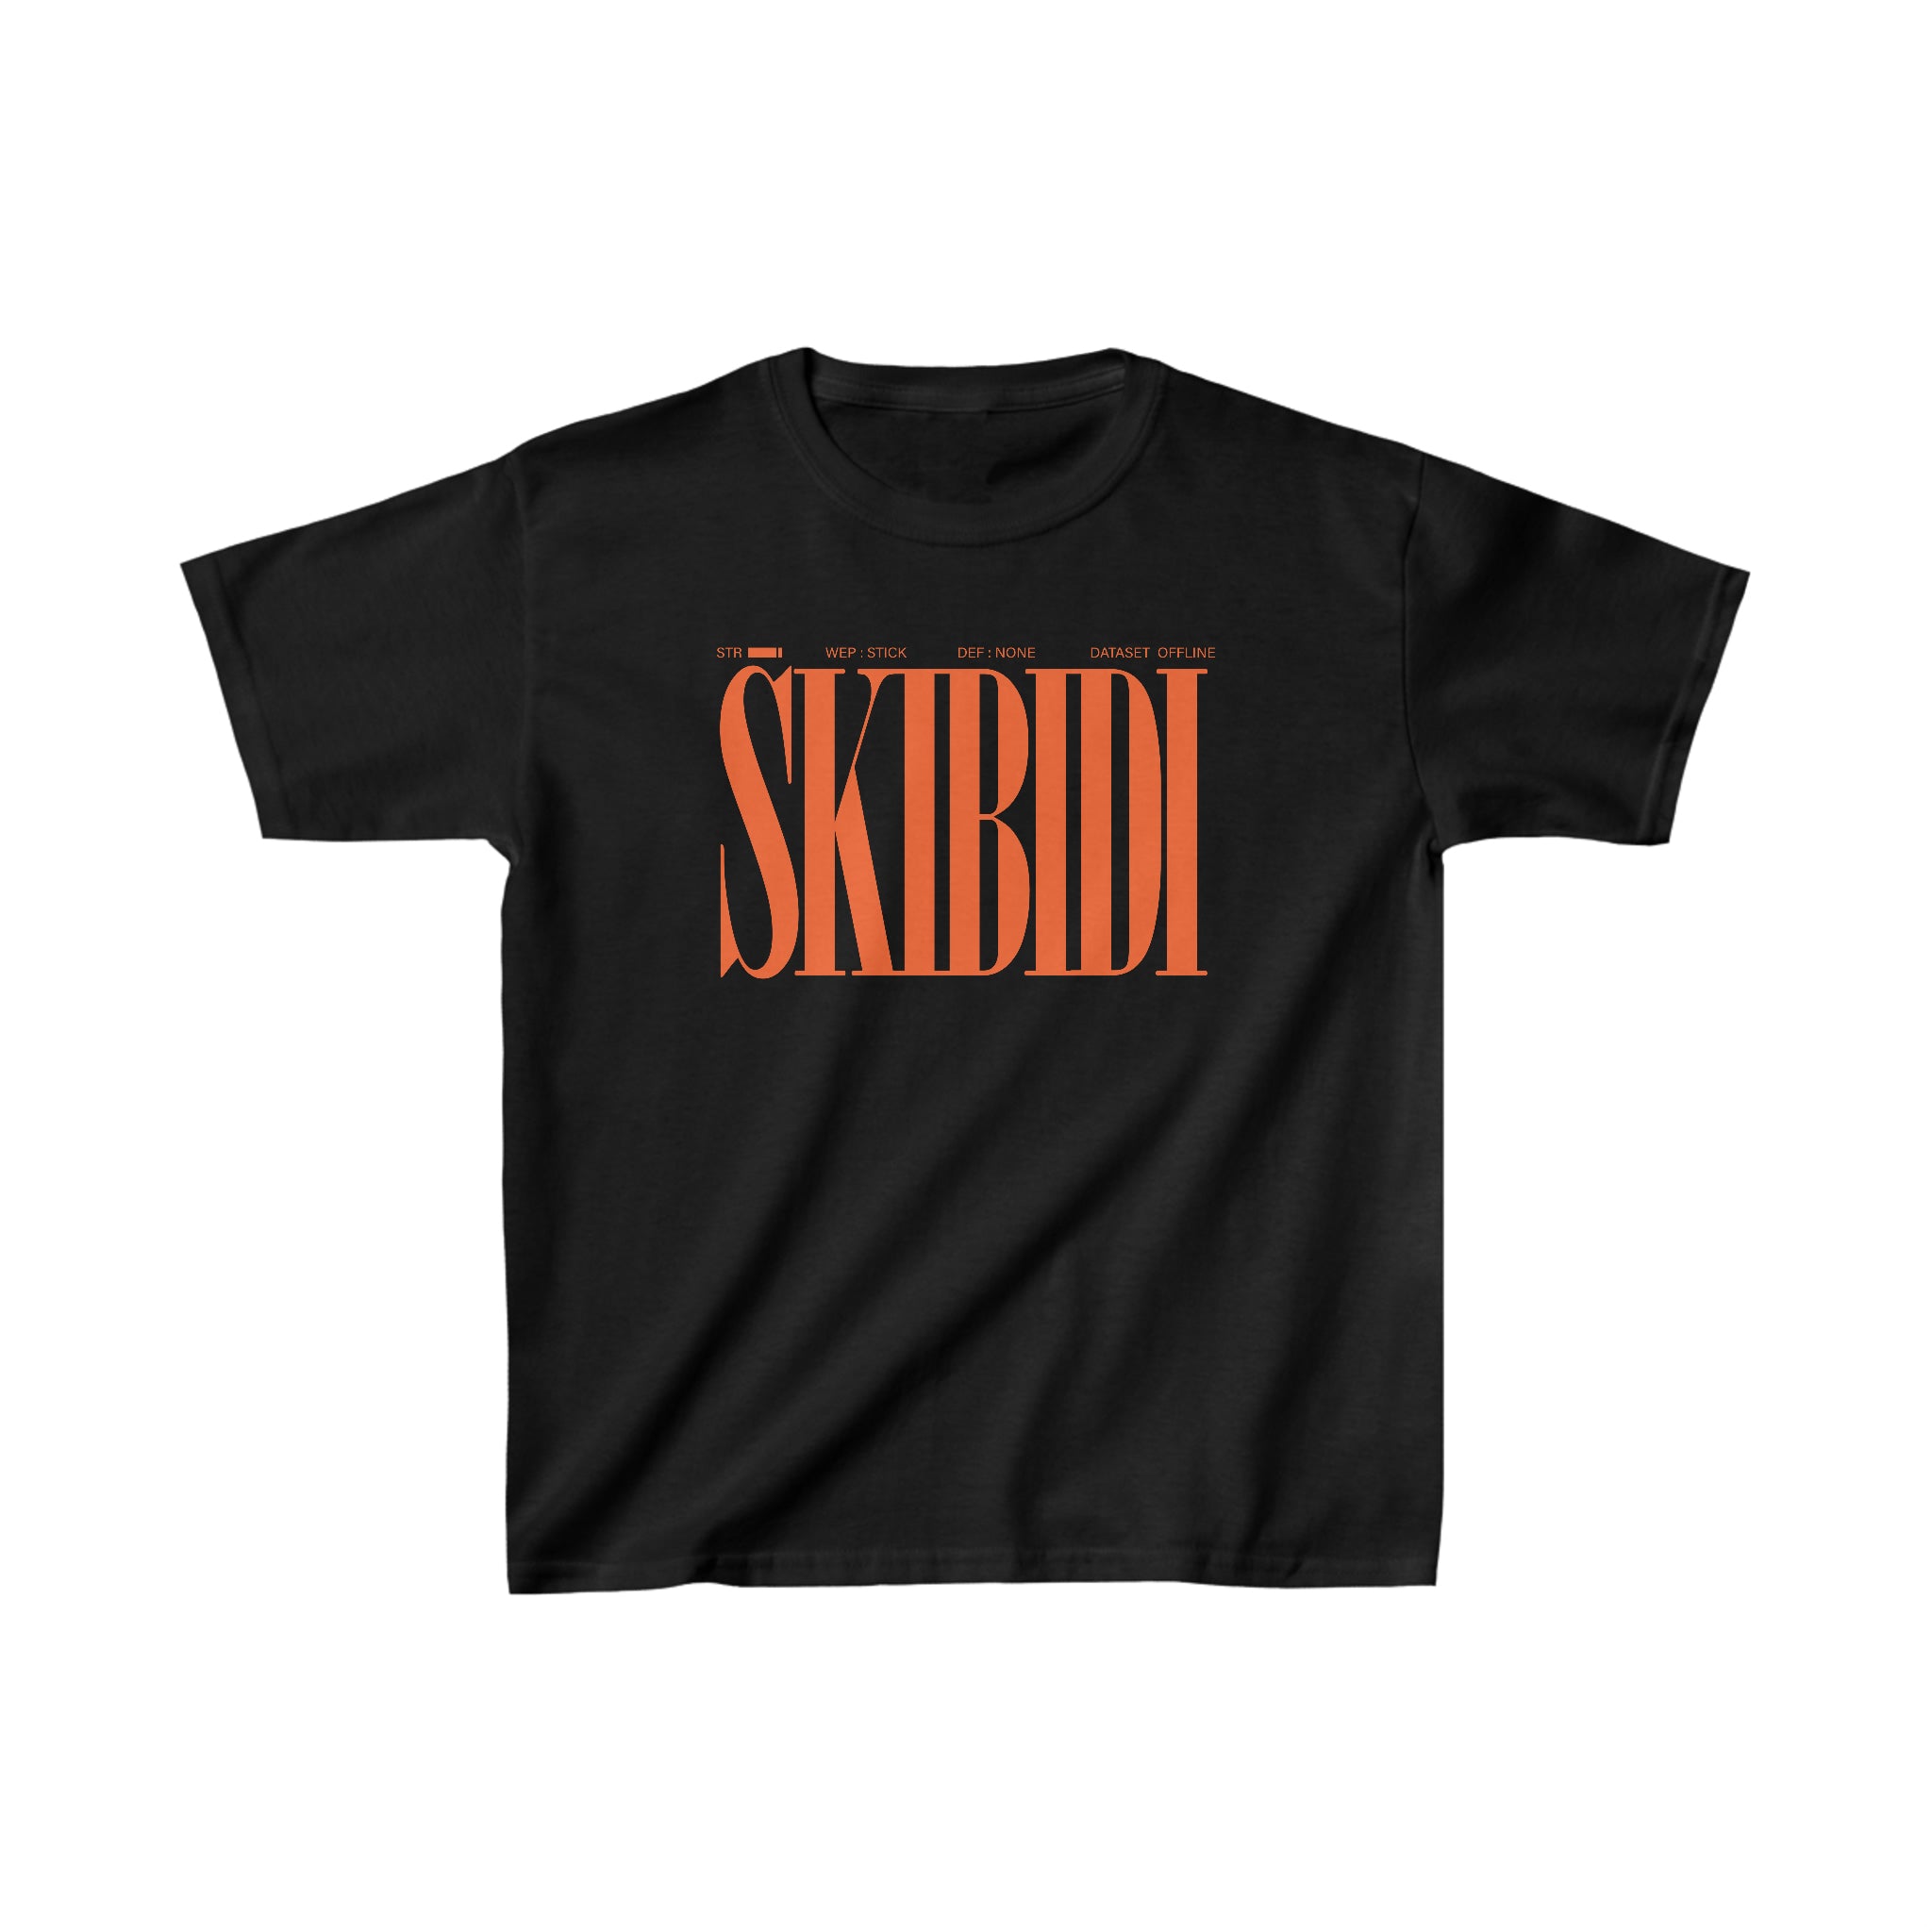 SKIBIDI logo youth tee, black shirt